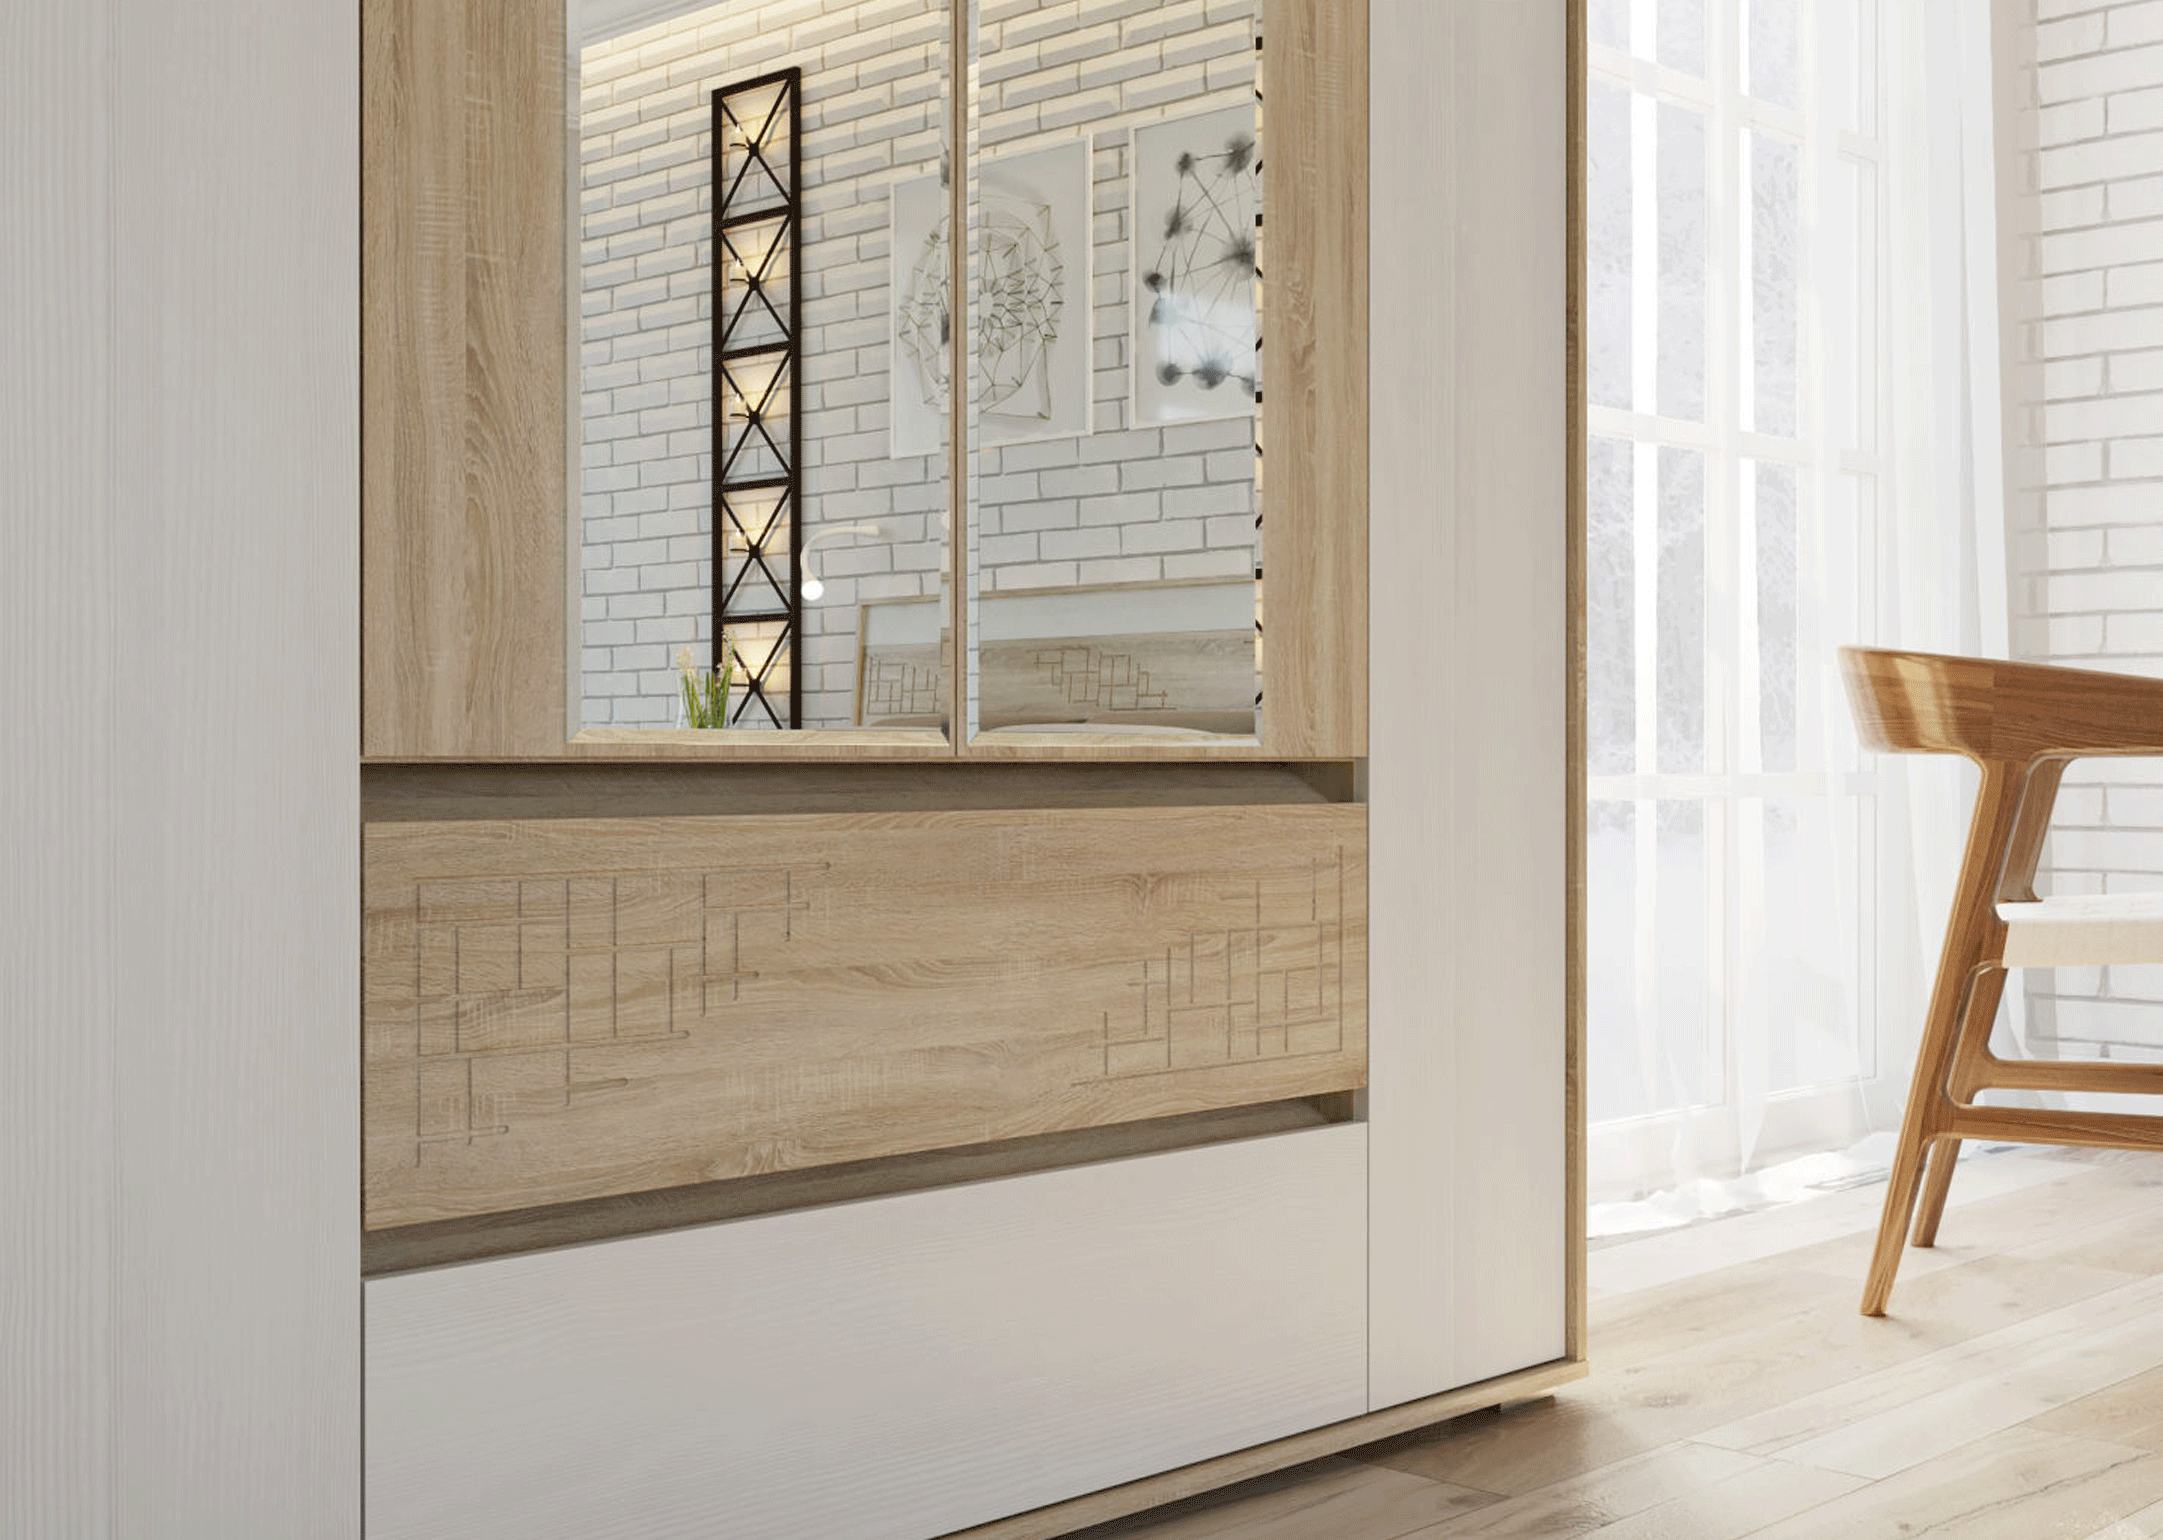 Шкаф 4-х створчатый с ящиками "Мальта" от магазина мебели МегаХод.РФ